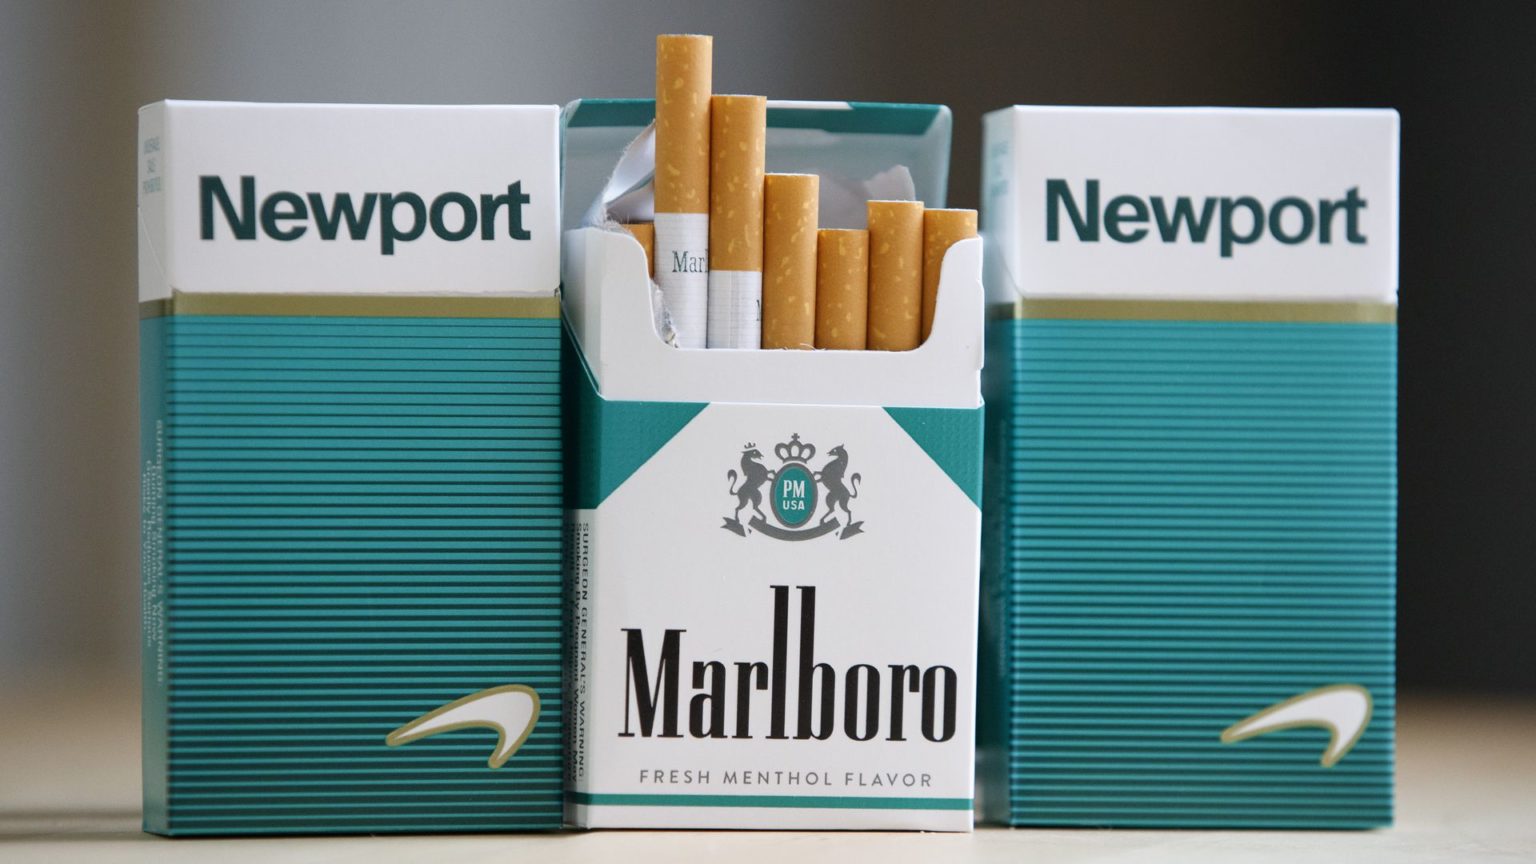 Biden to Ban Menthol Cigarettes Outside the Beltway